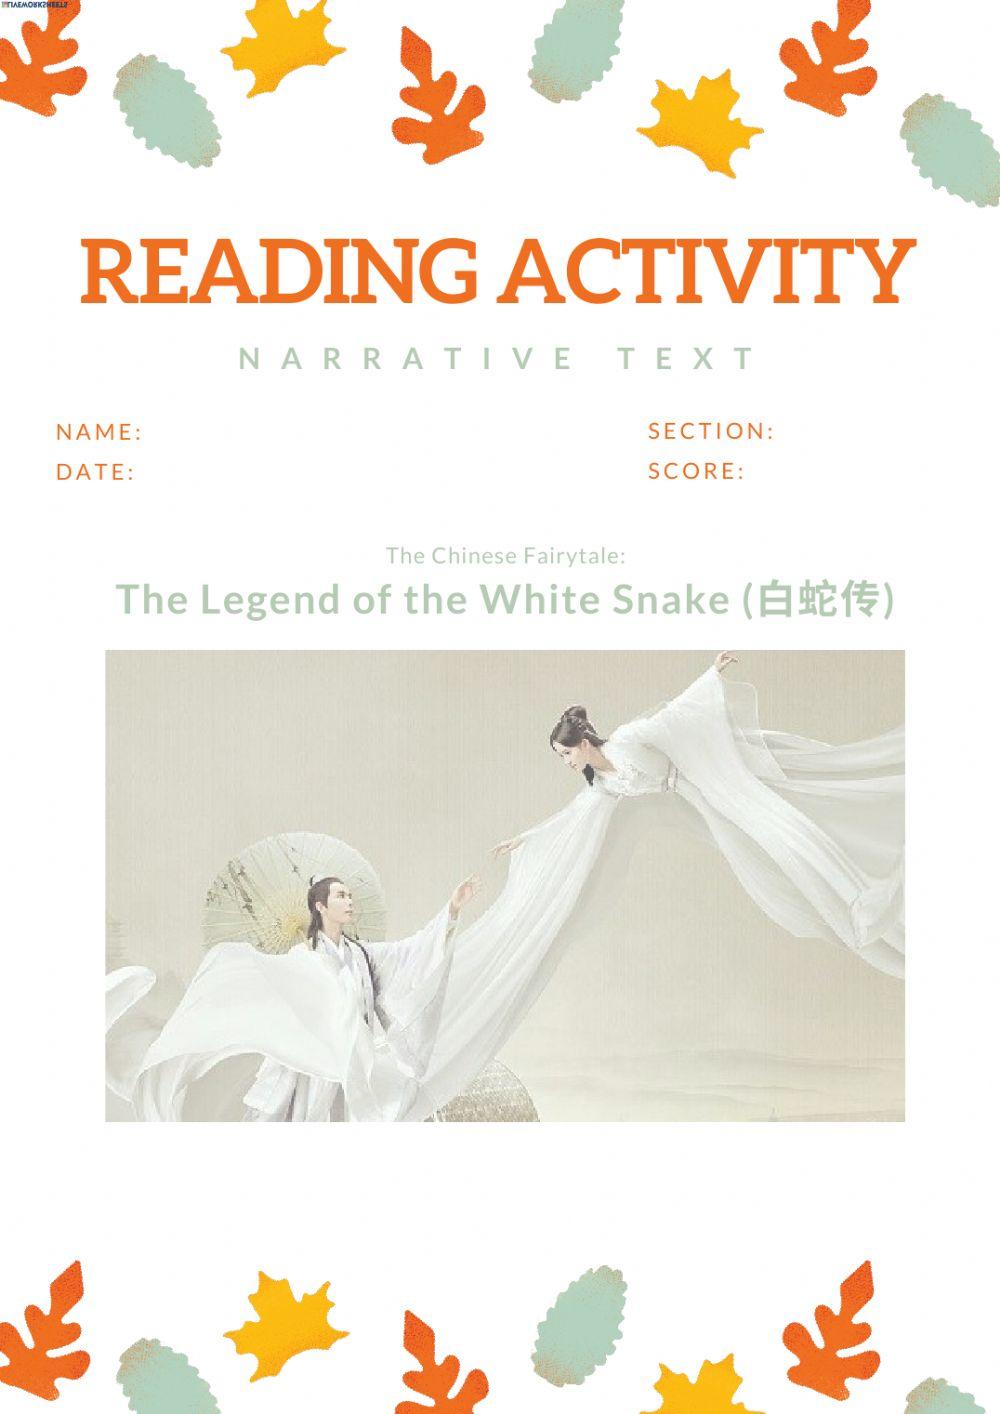 Reading Activity: Narrative Text